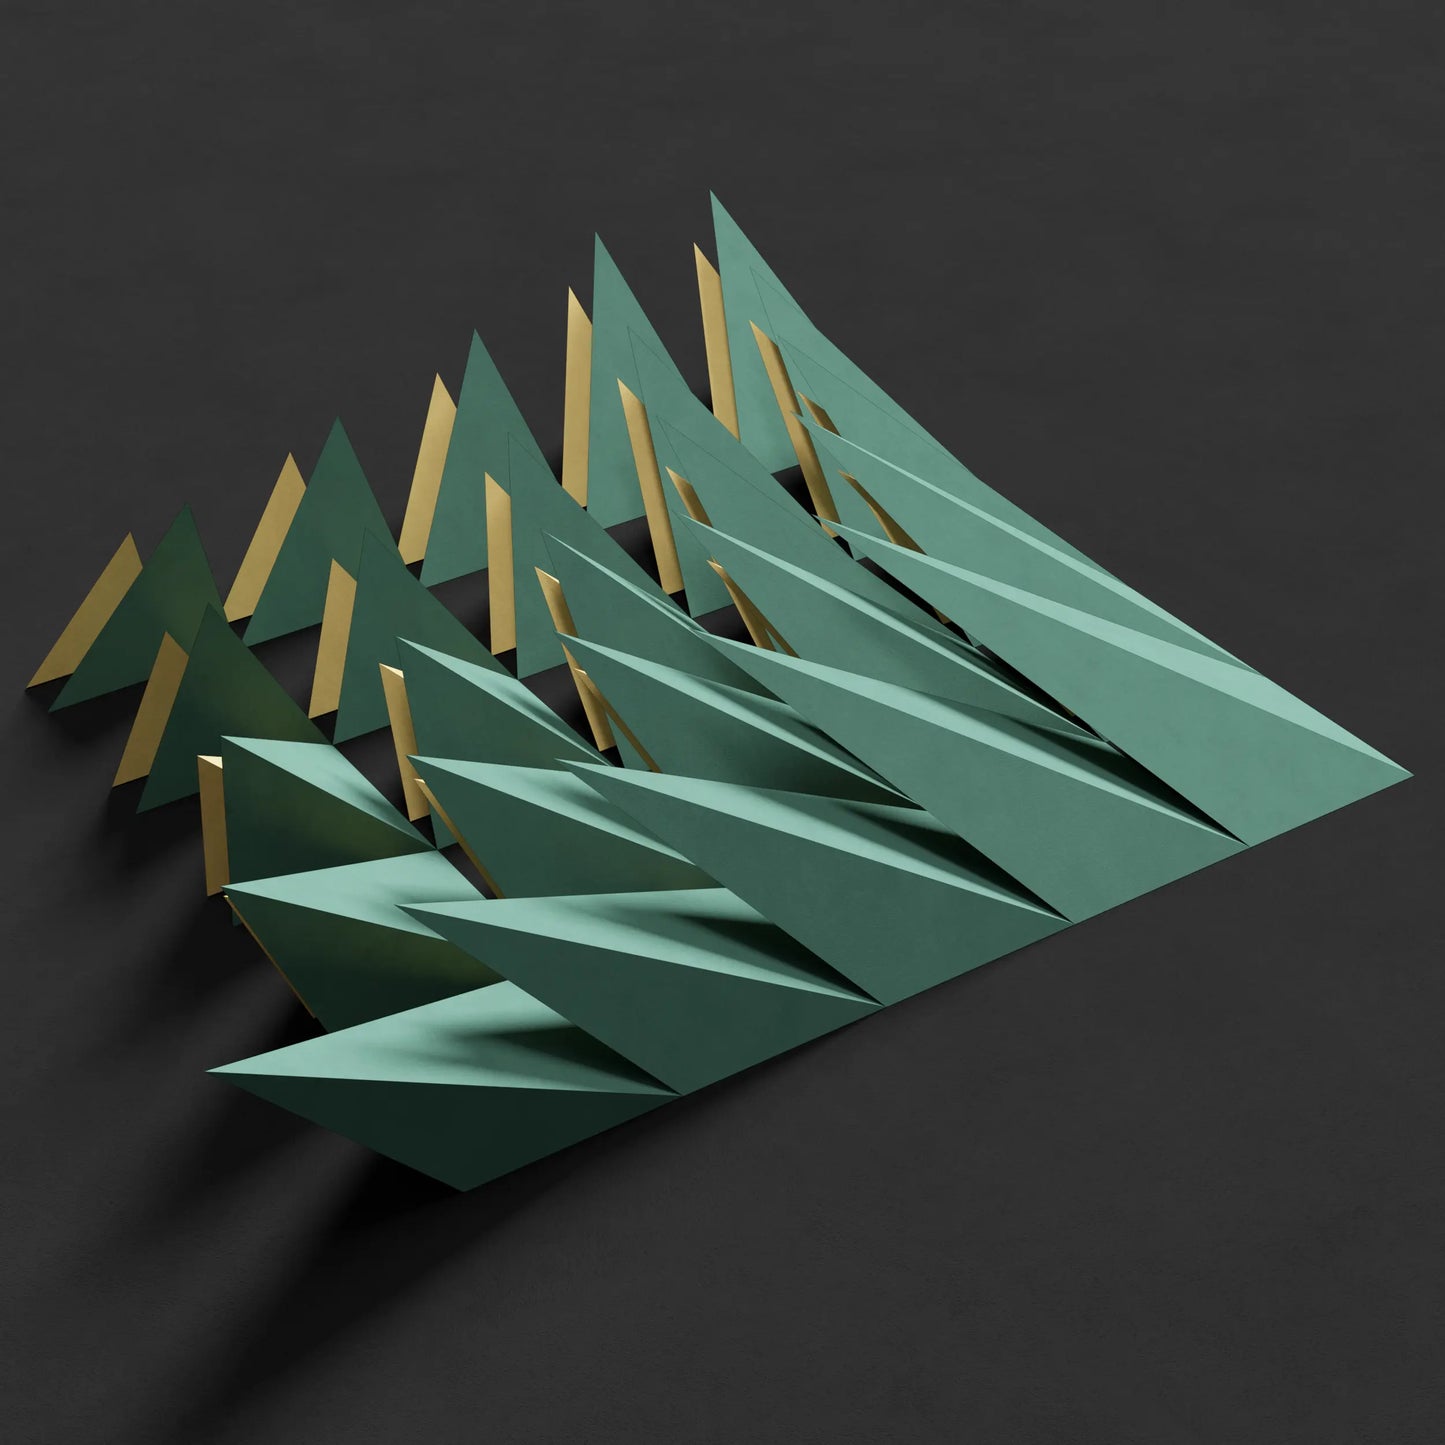 THORNY ARROW - PARAGAMI 14_06 - TEMPLATE for 3D HANDMADE PAPER WALL ART_ PARAMETRIC DESIGN Paragami 